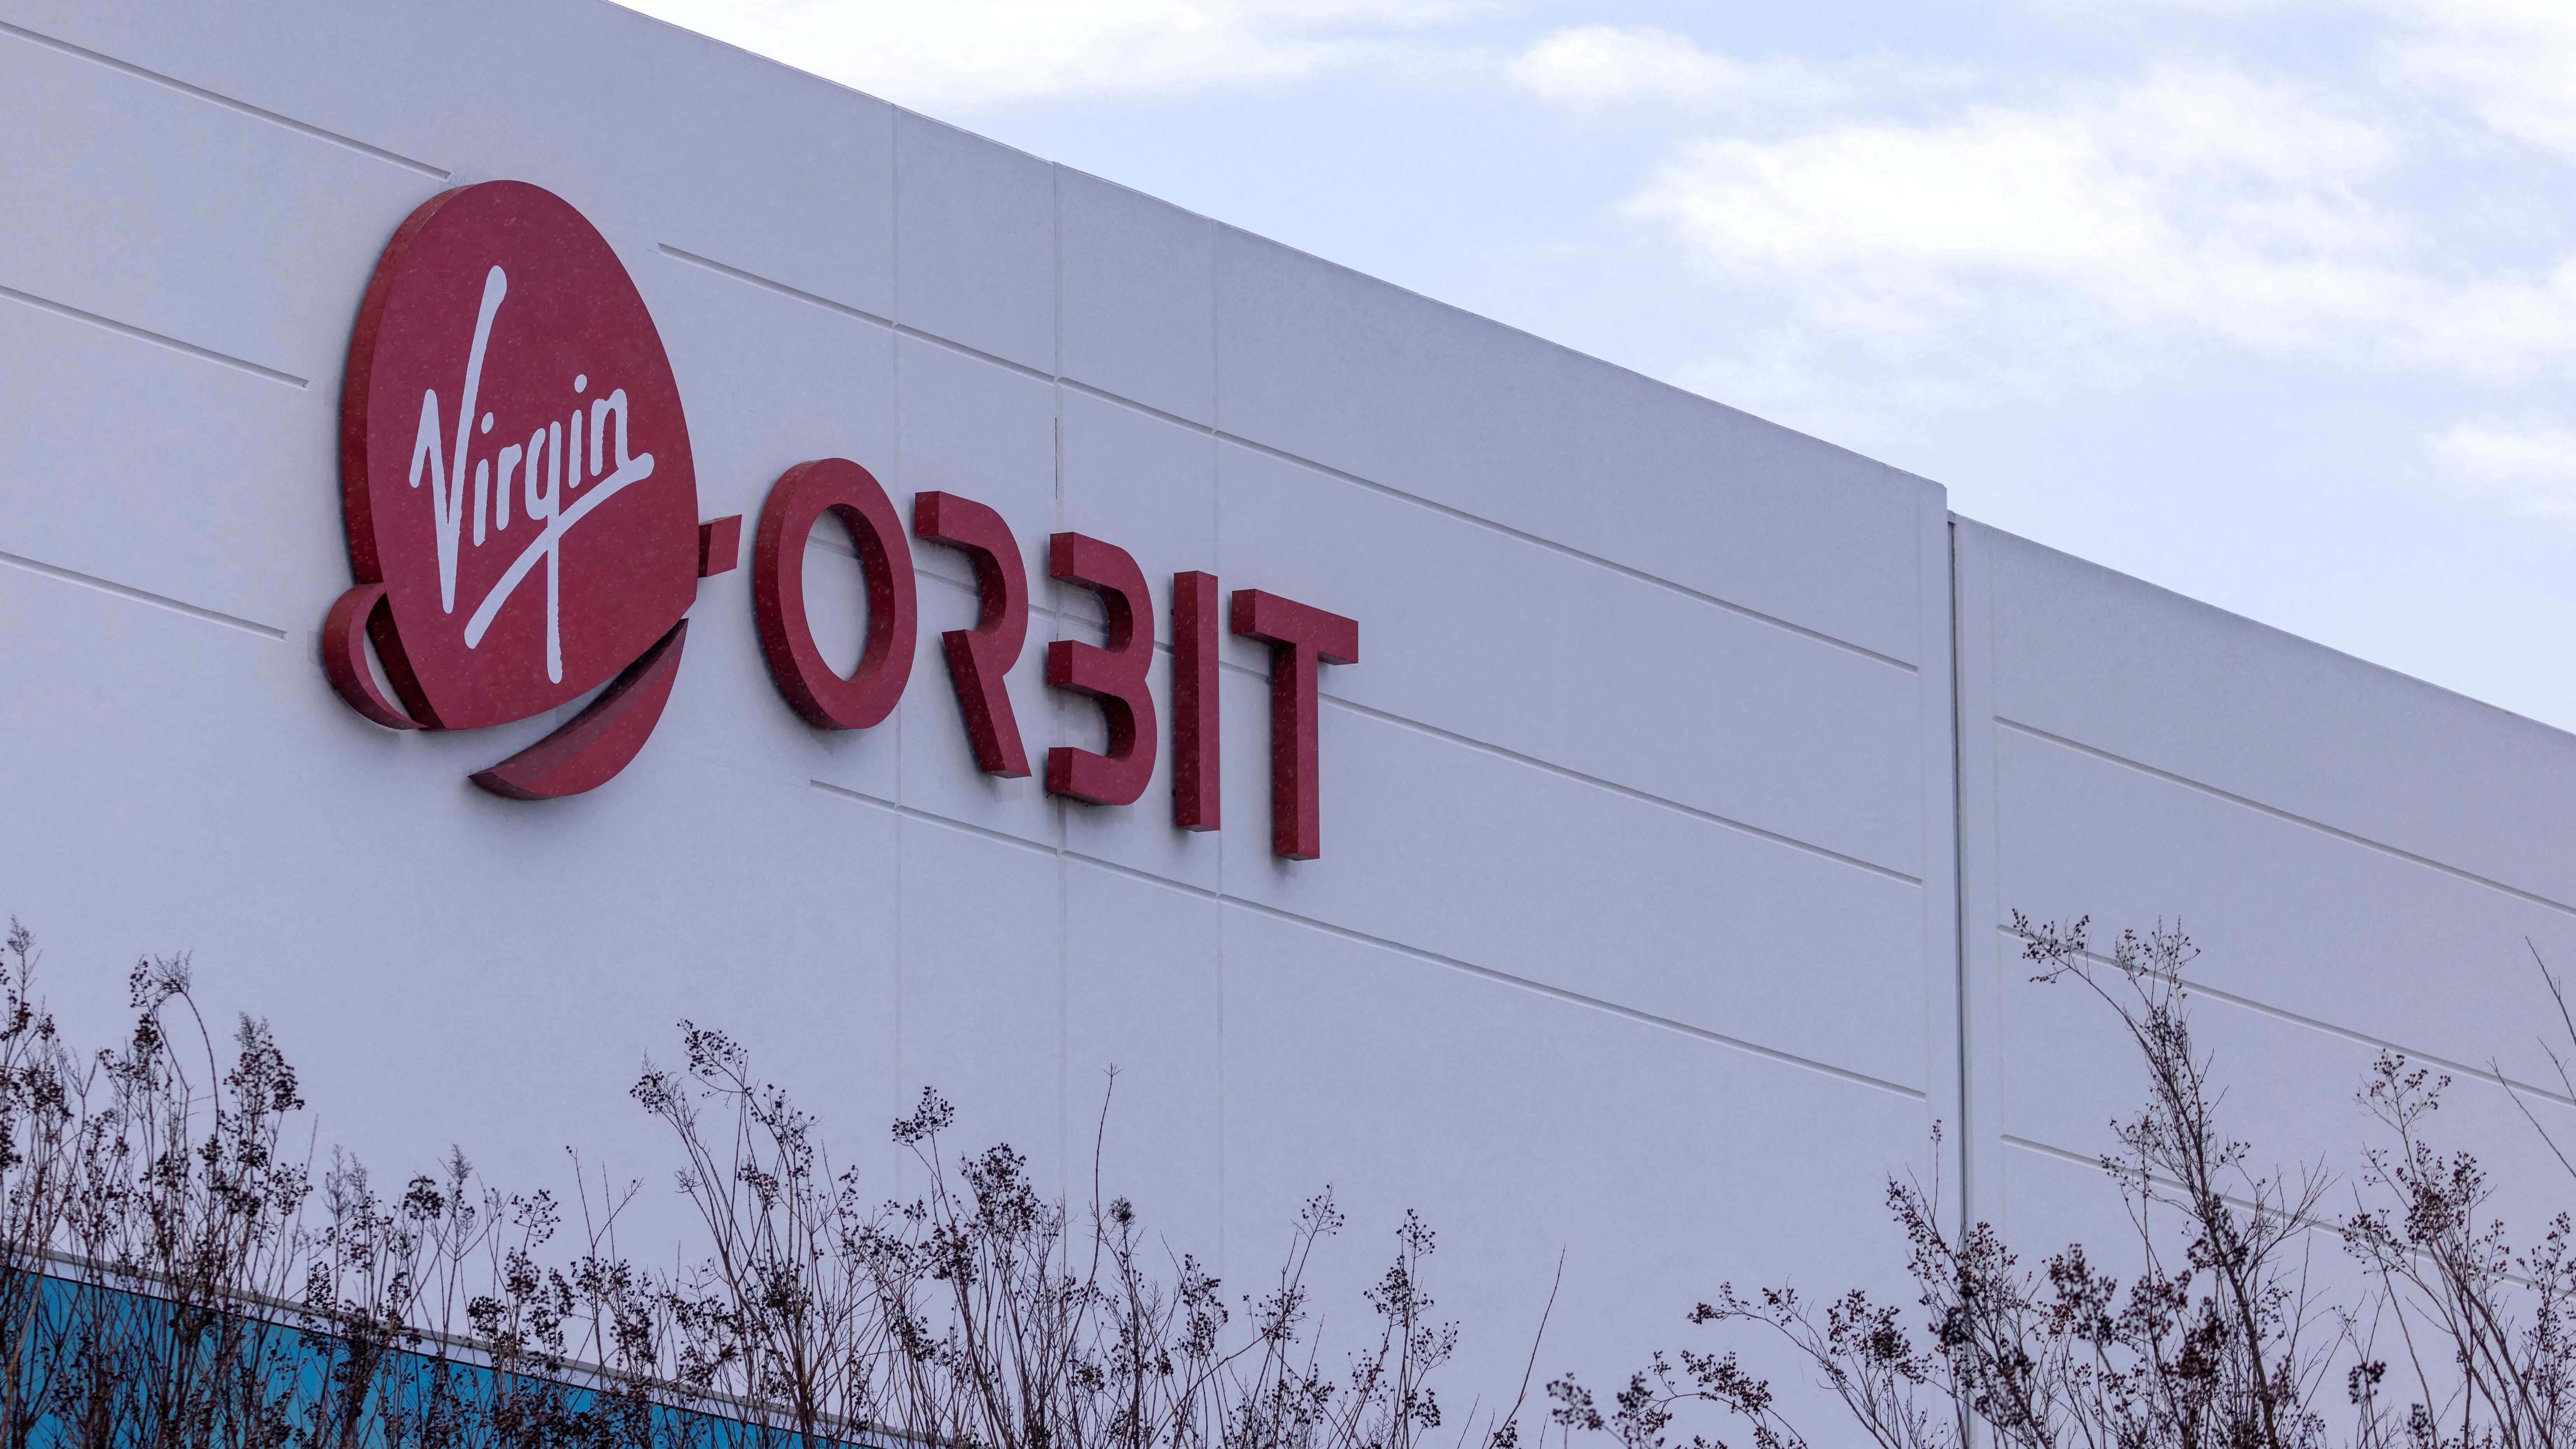 Virgin Orbit Says Space Startup In Talks With Potential Investors